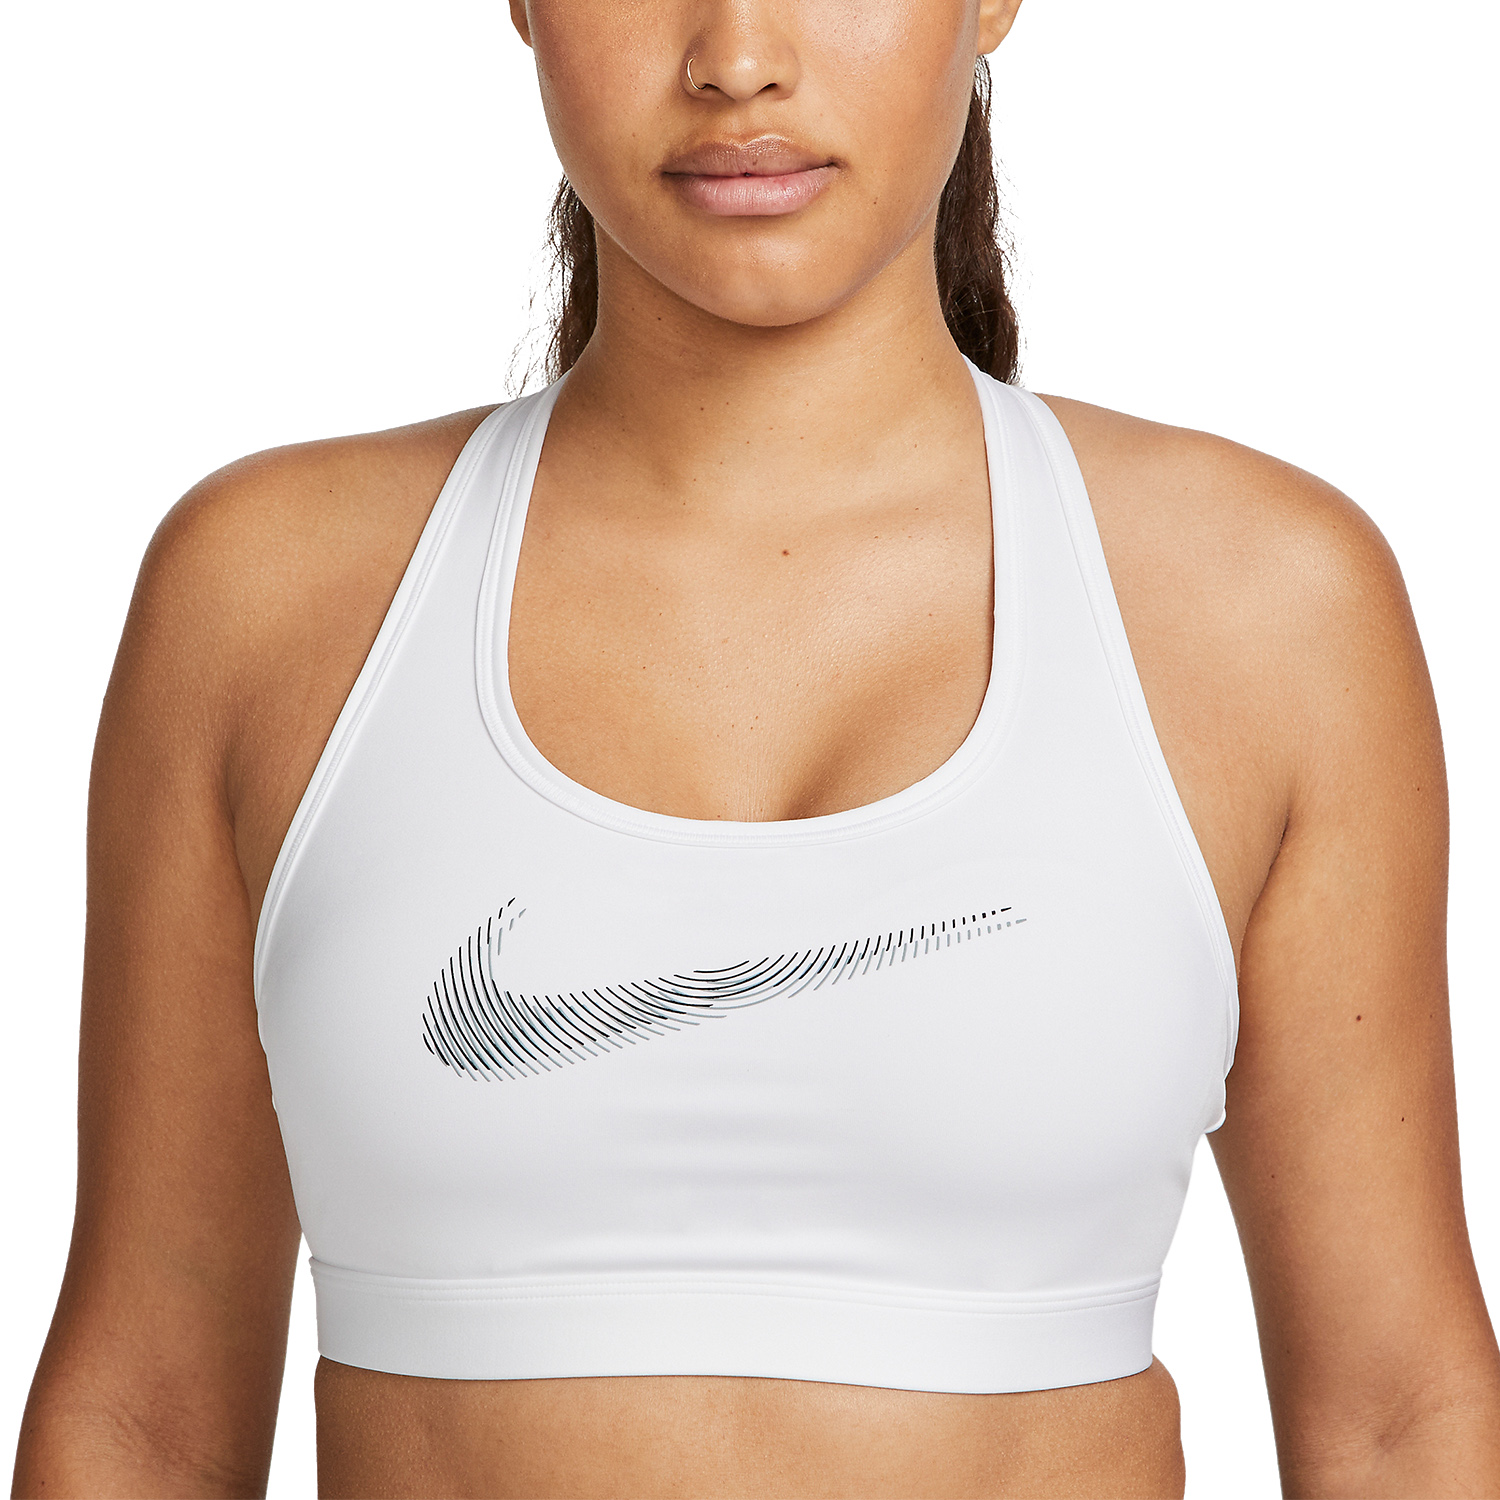 Nike Swoosh Medium Support Bra - Black/White